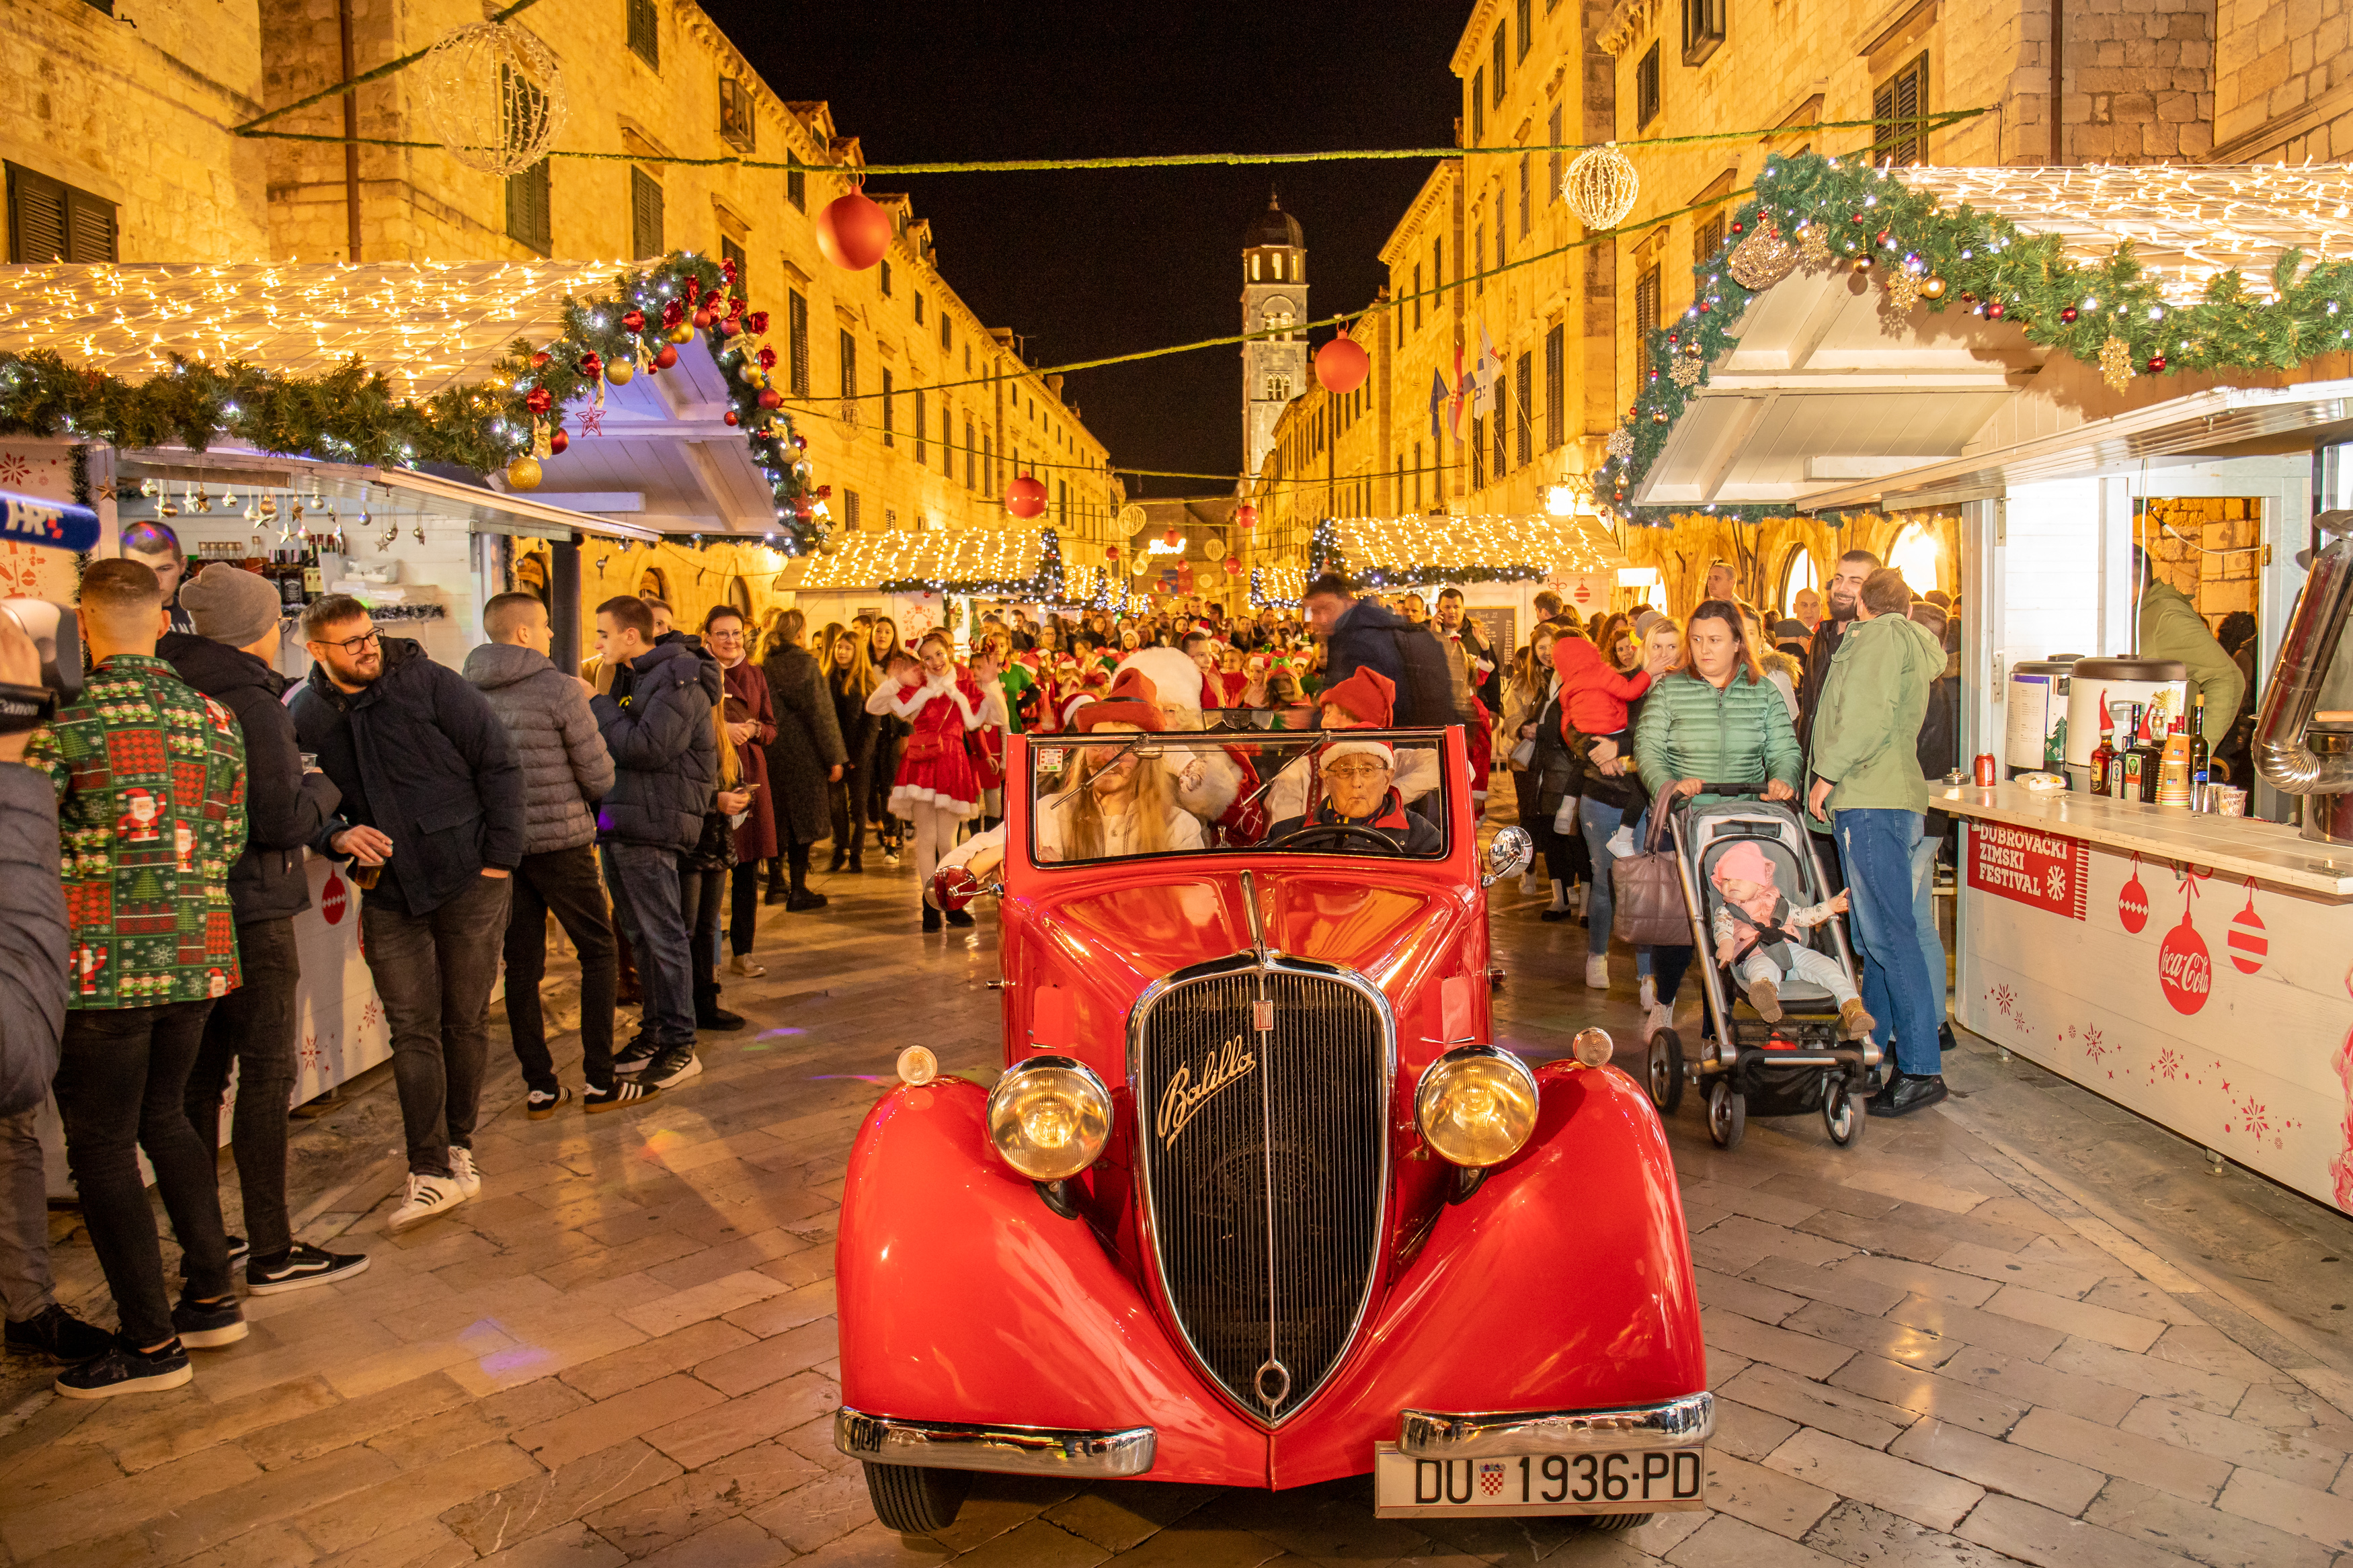 Christmas is coming to Dubrovnik